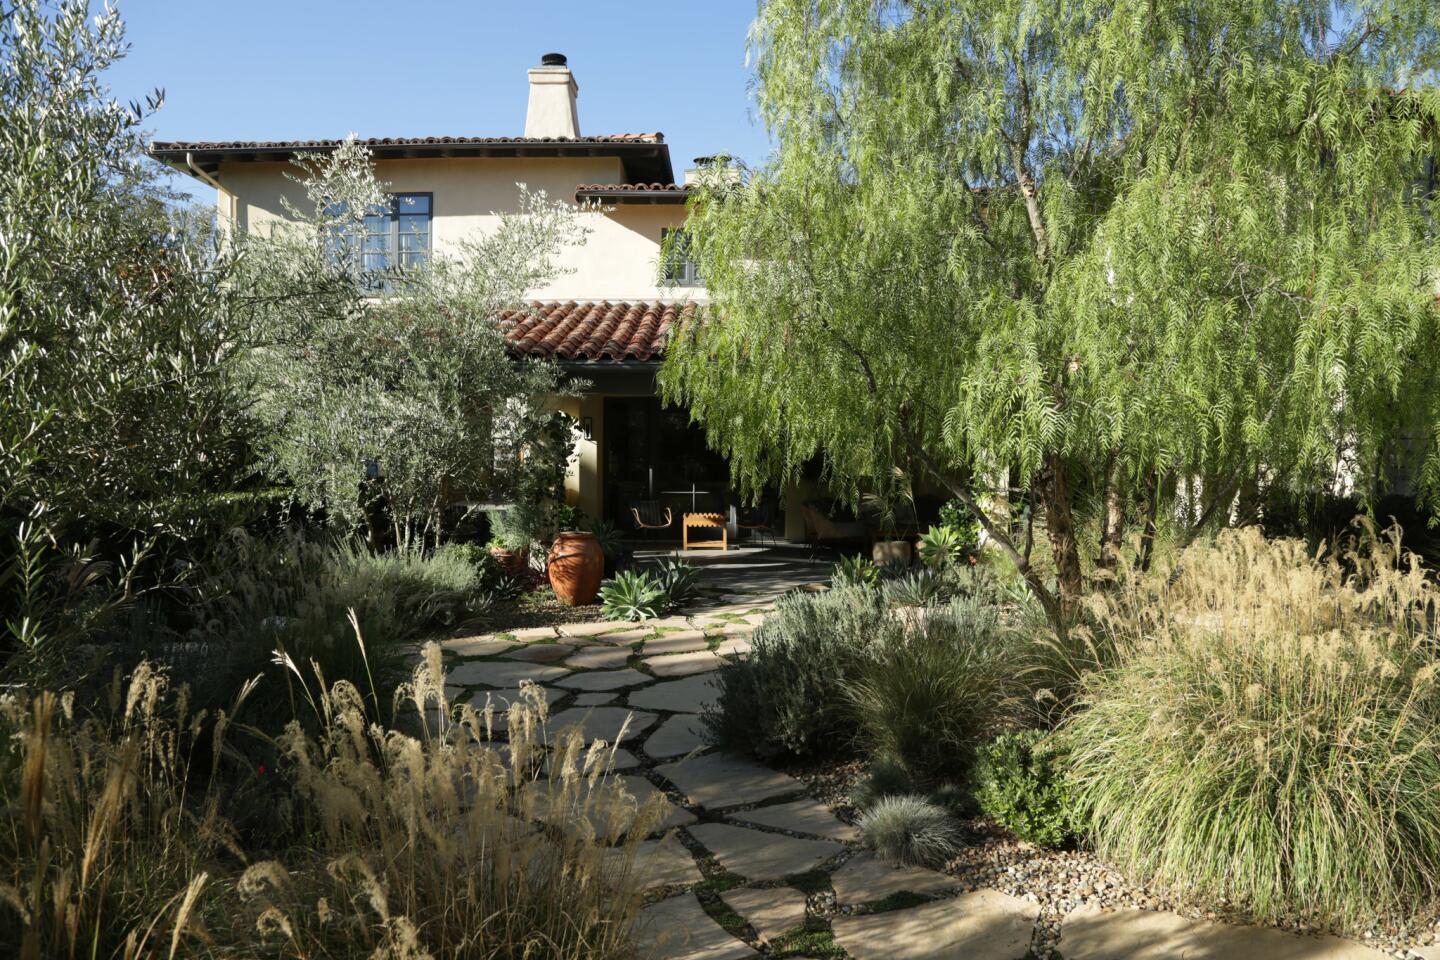 Garden designer Naomi Sanders dramatically transformed an uninspired, Bel Air lawn into a drought tolderant, lush garden. Her guiding principle: privacy and depth.